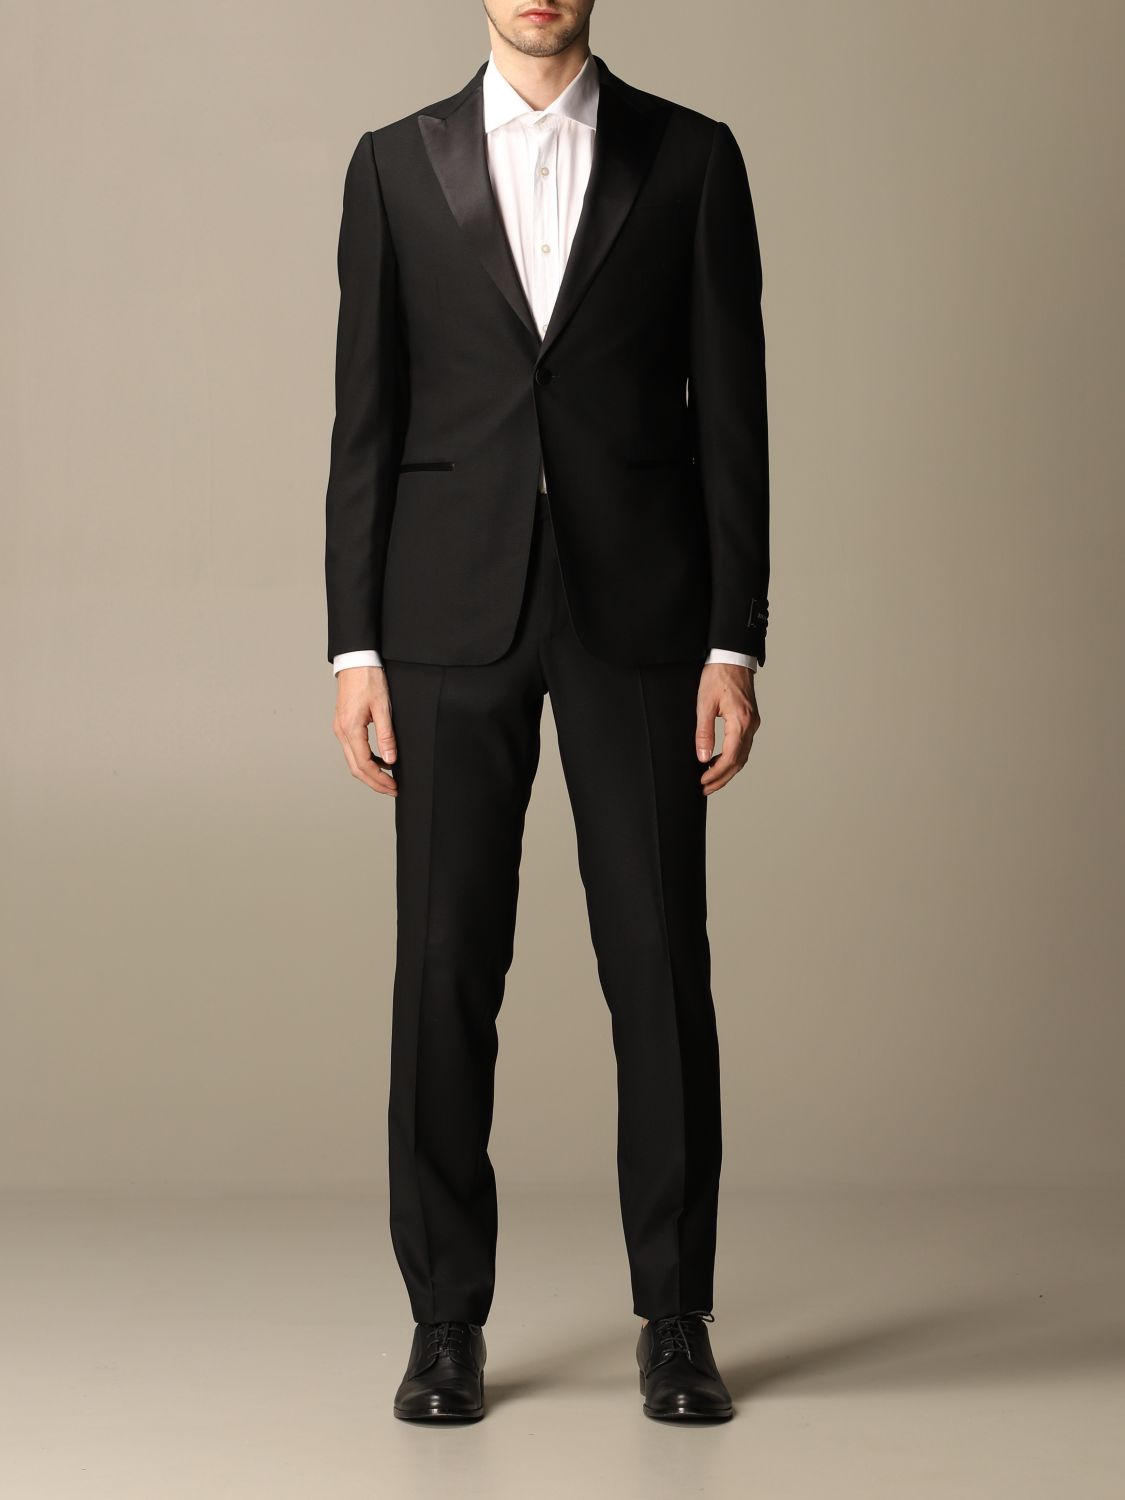 Z Zegna Outlet: single-breasted tuxedo in wool 260 gr - Black | Z Zegna  suit 282KGQ 824 online on 